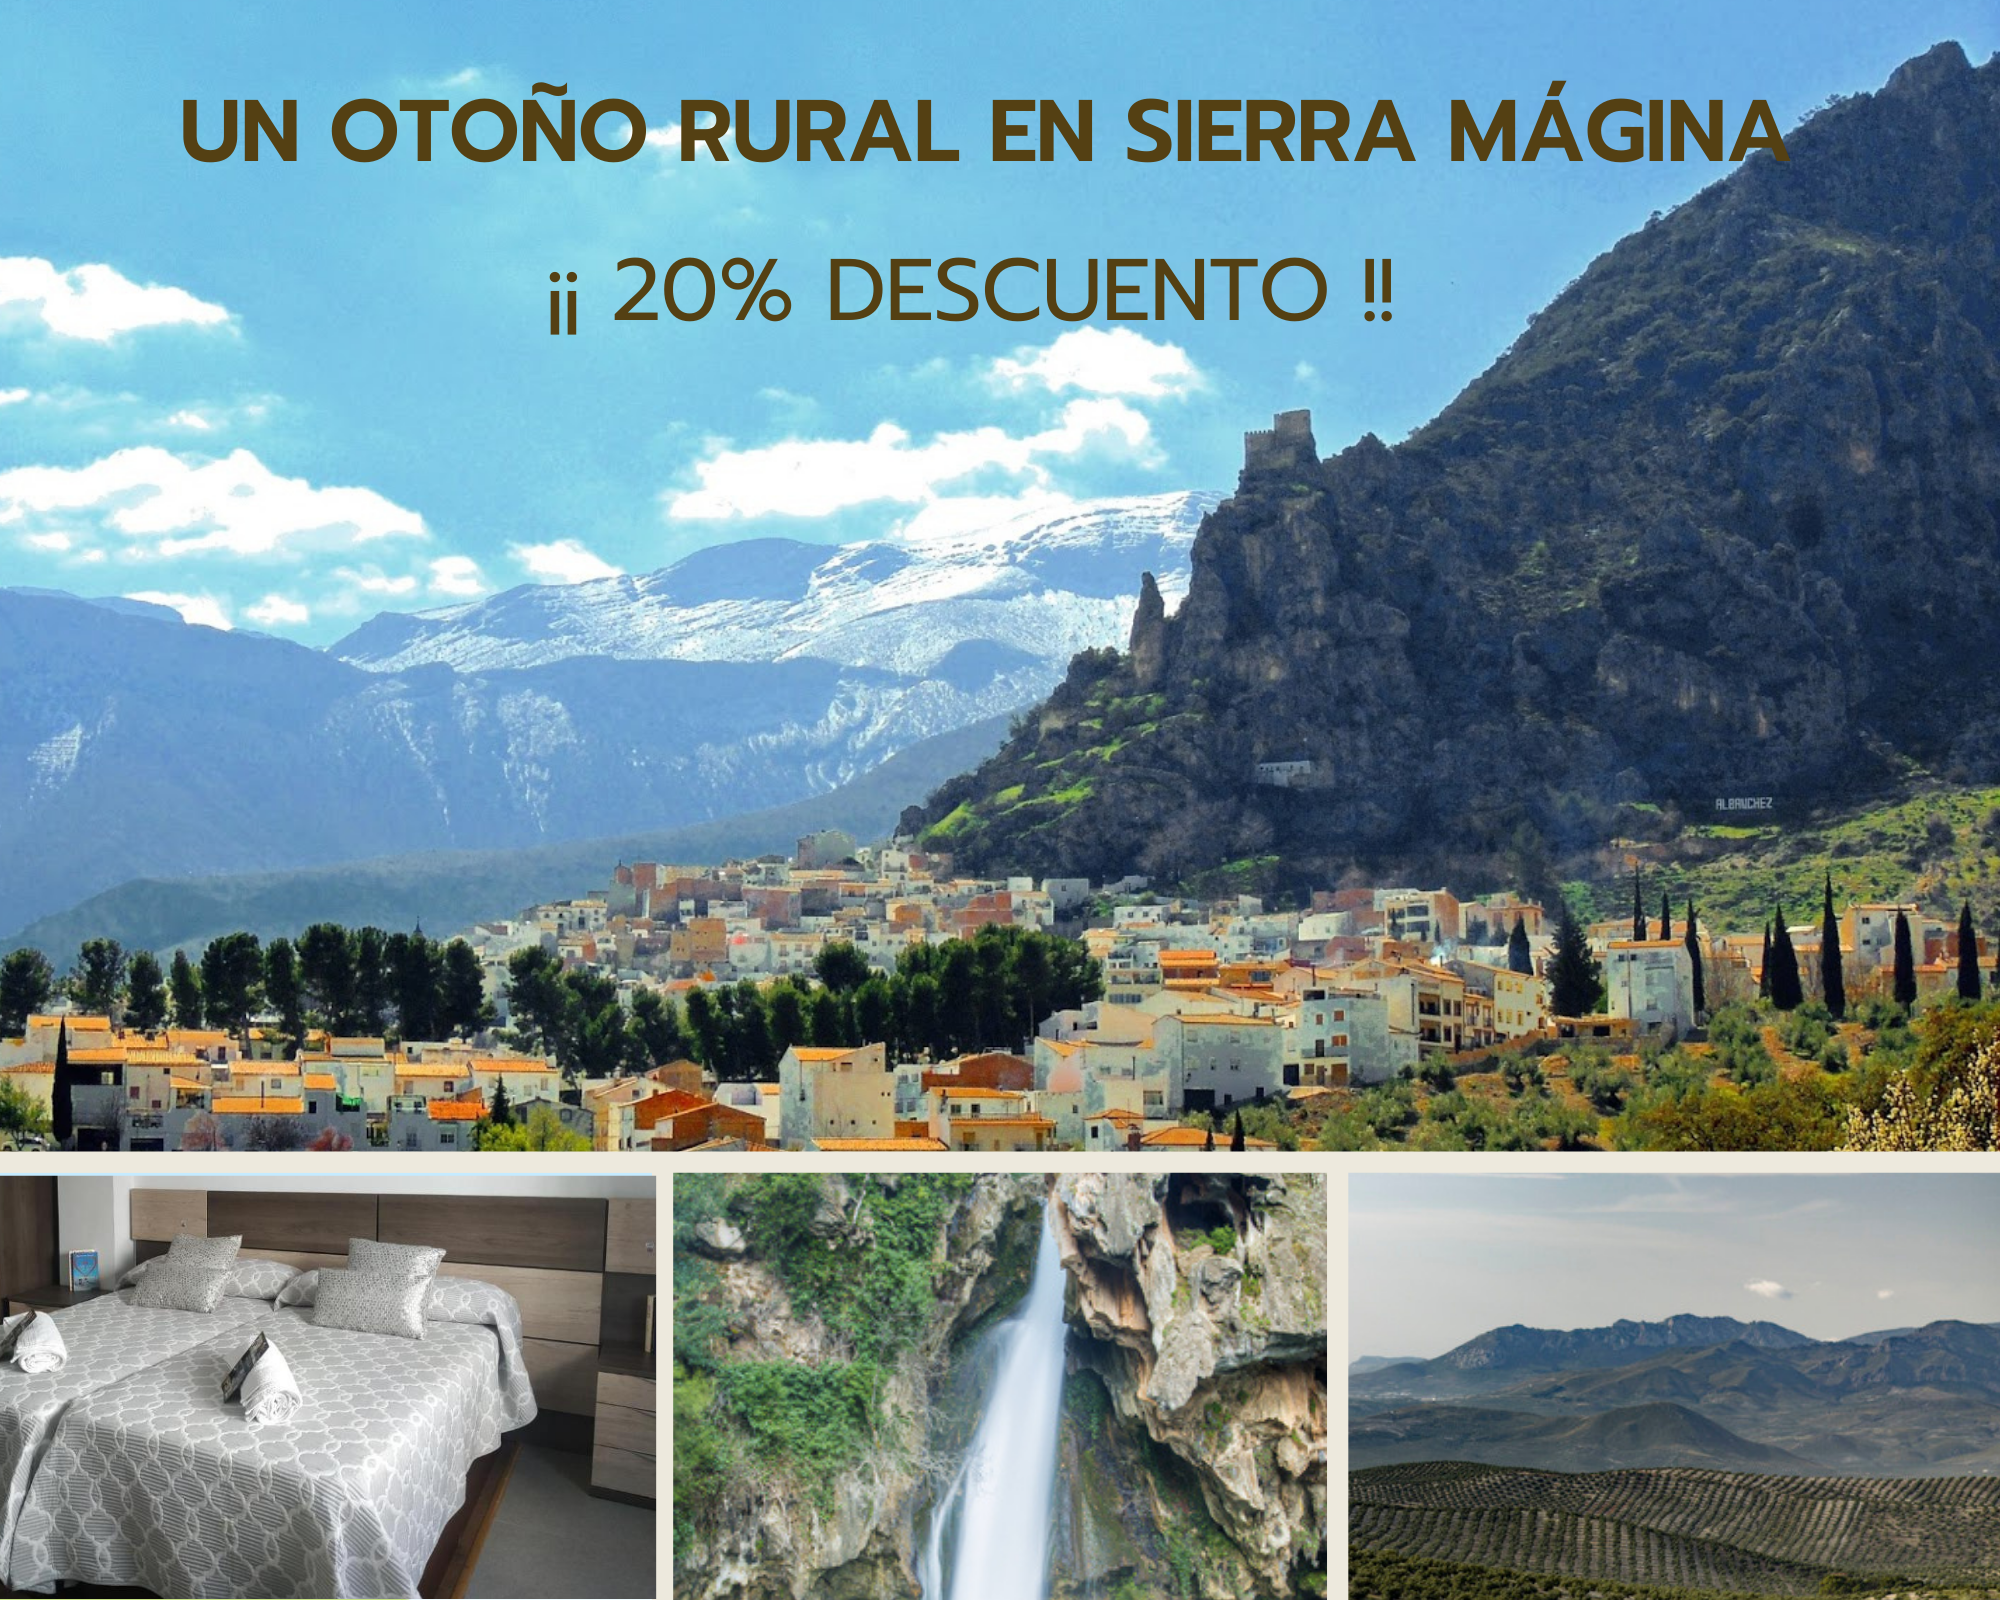 Rural autumn in Sierra Mágina 20% discount